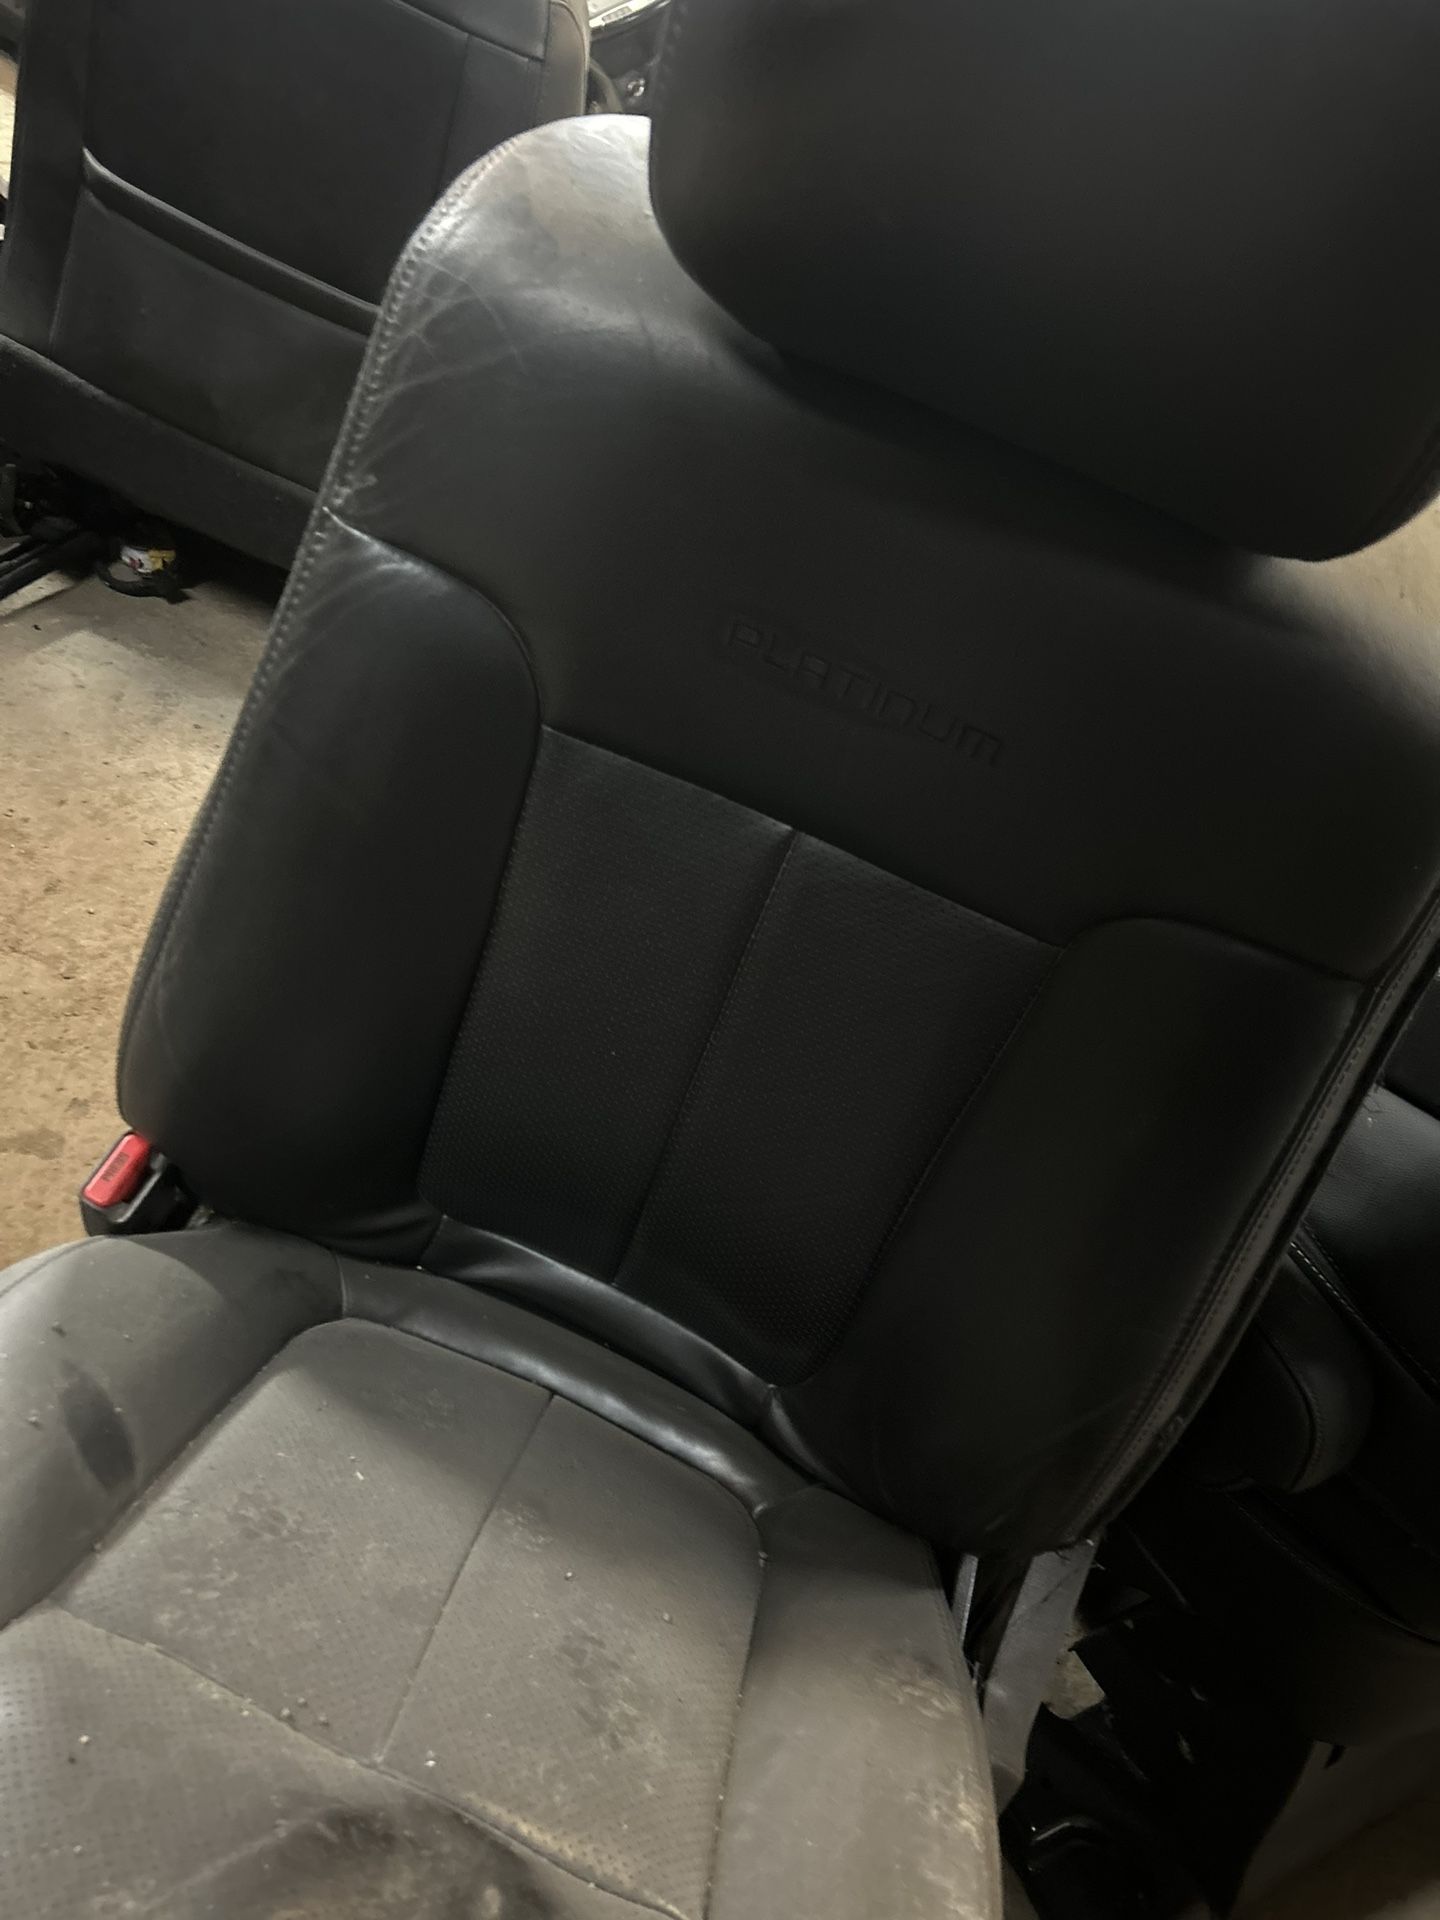 Ford Platinum Seats